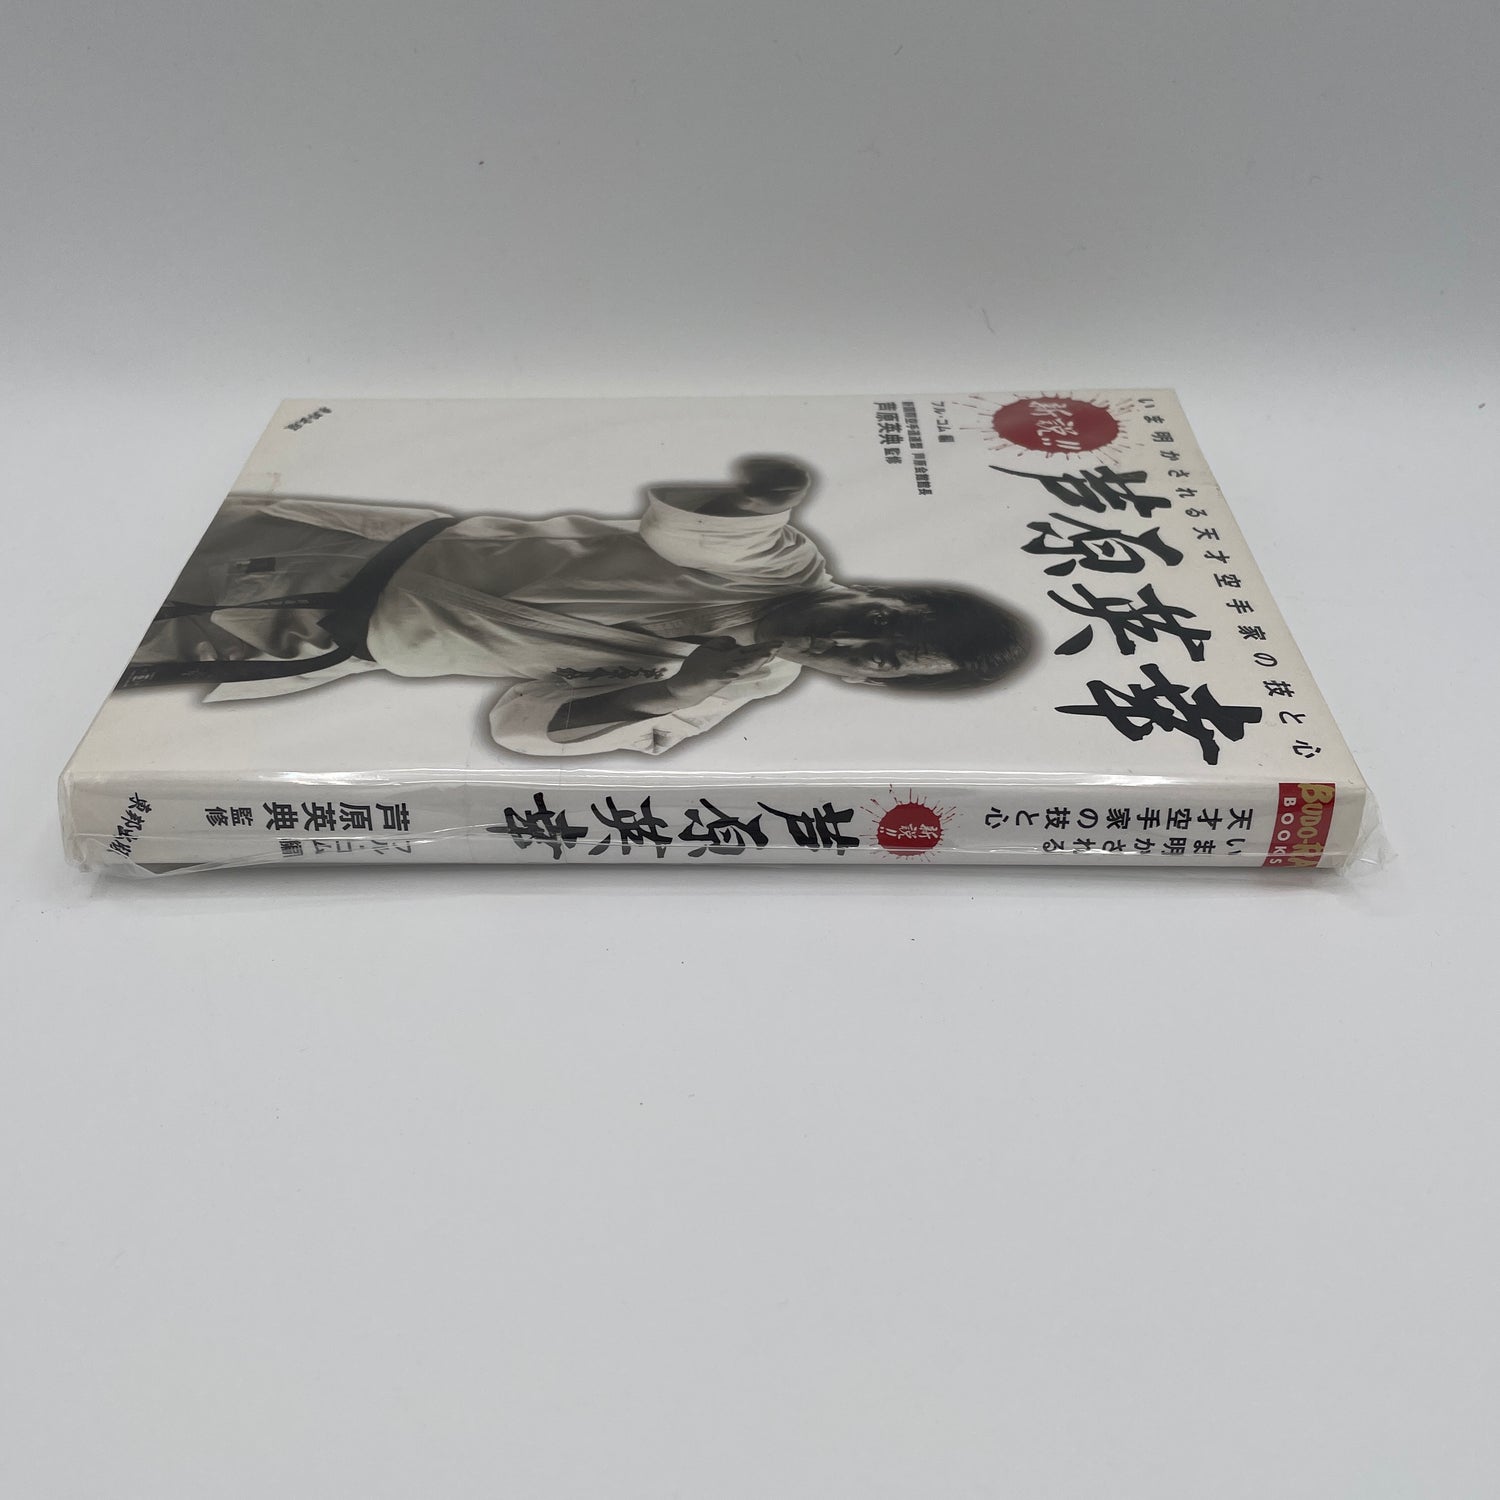 Skill & Heart of Genius Karateka Book & DVD by Hidenori Ashihara (Preowned)